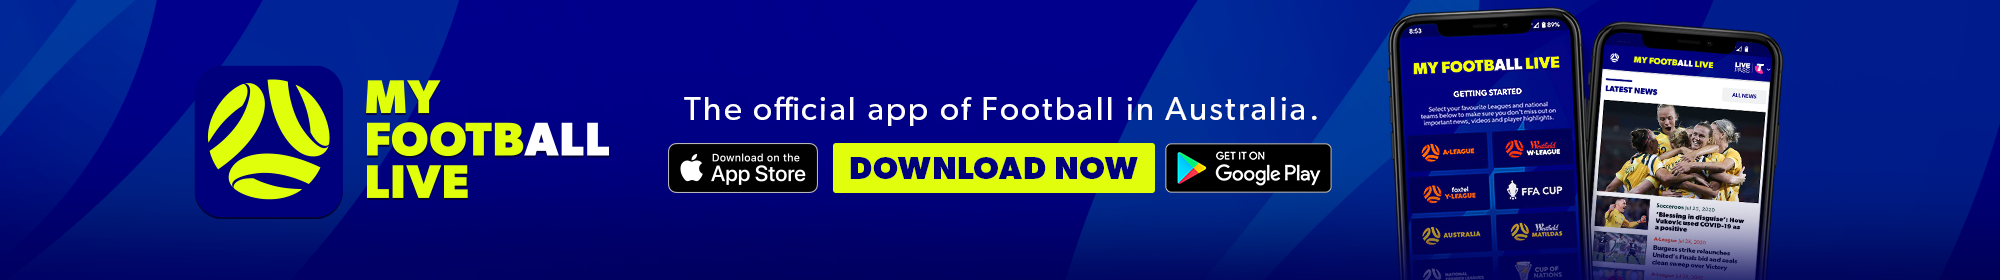 My Football Live app thin banner 2020